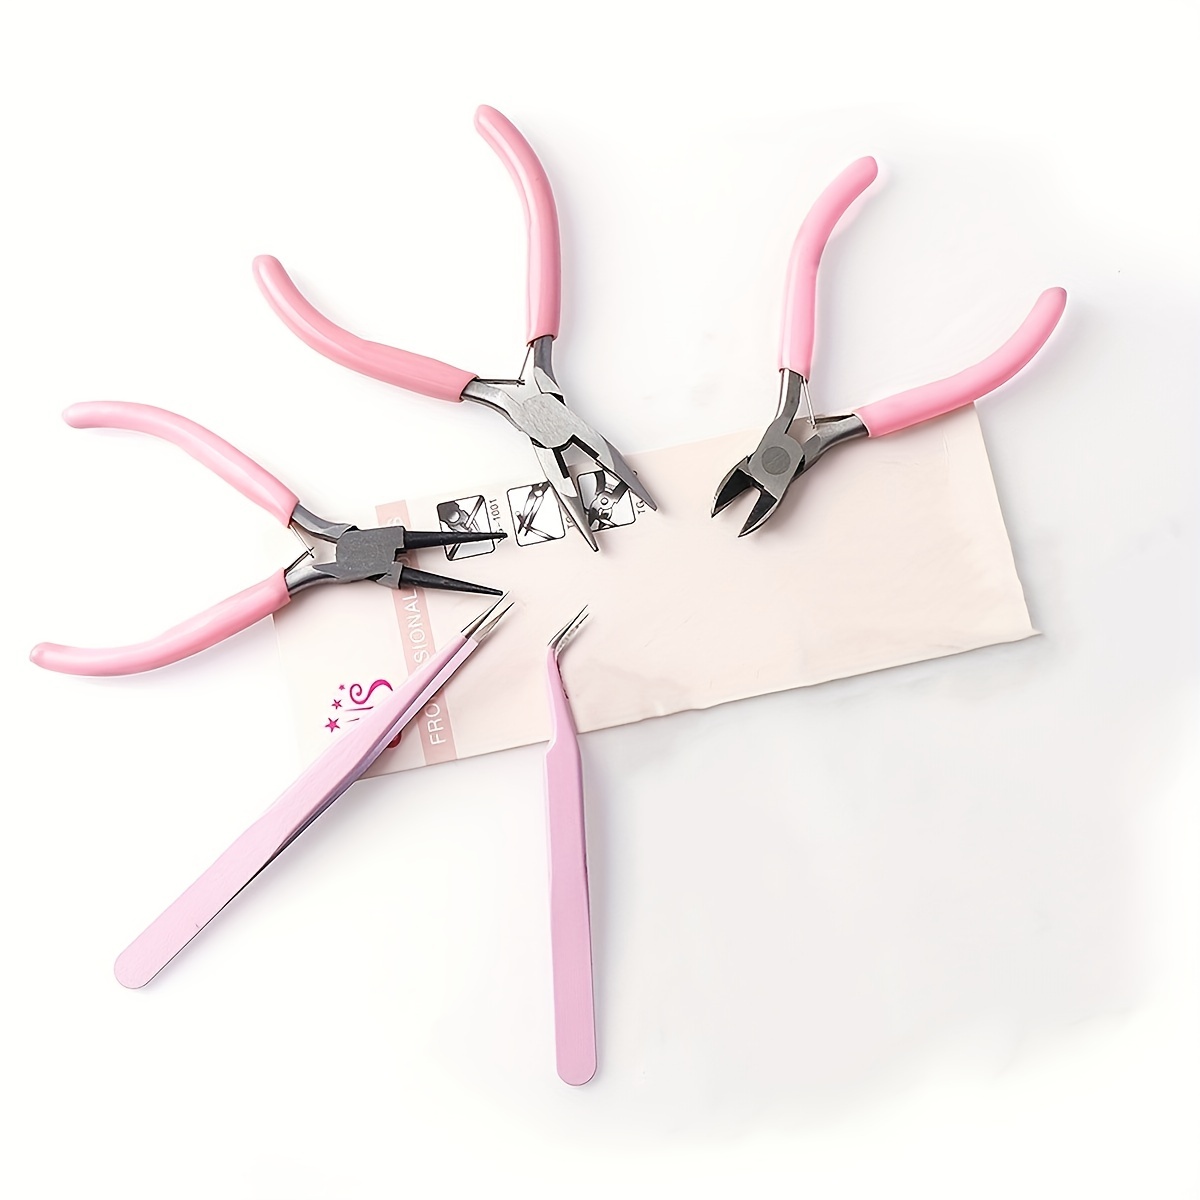 1-Step Looper pliers Craft Wire Loops for Rosaries Earrings Bracelets  Necklaces jewelry bending string pliers - AliExpress